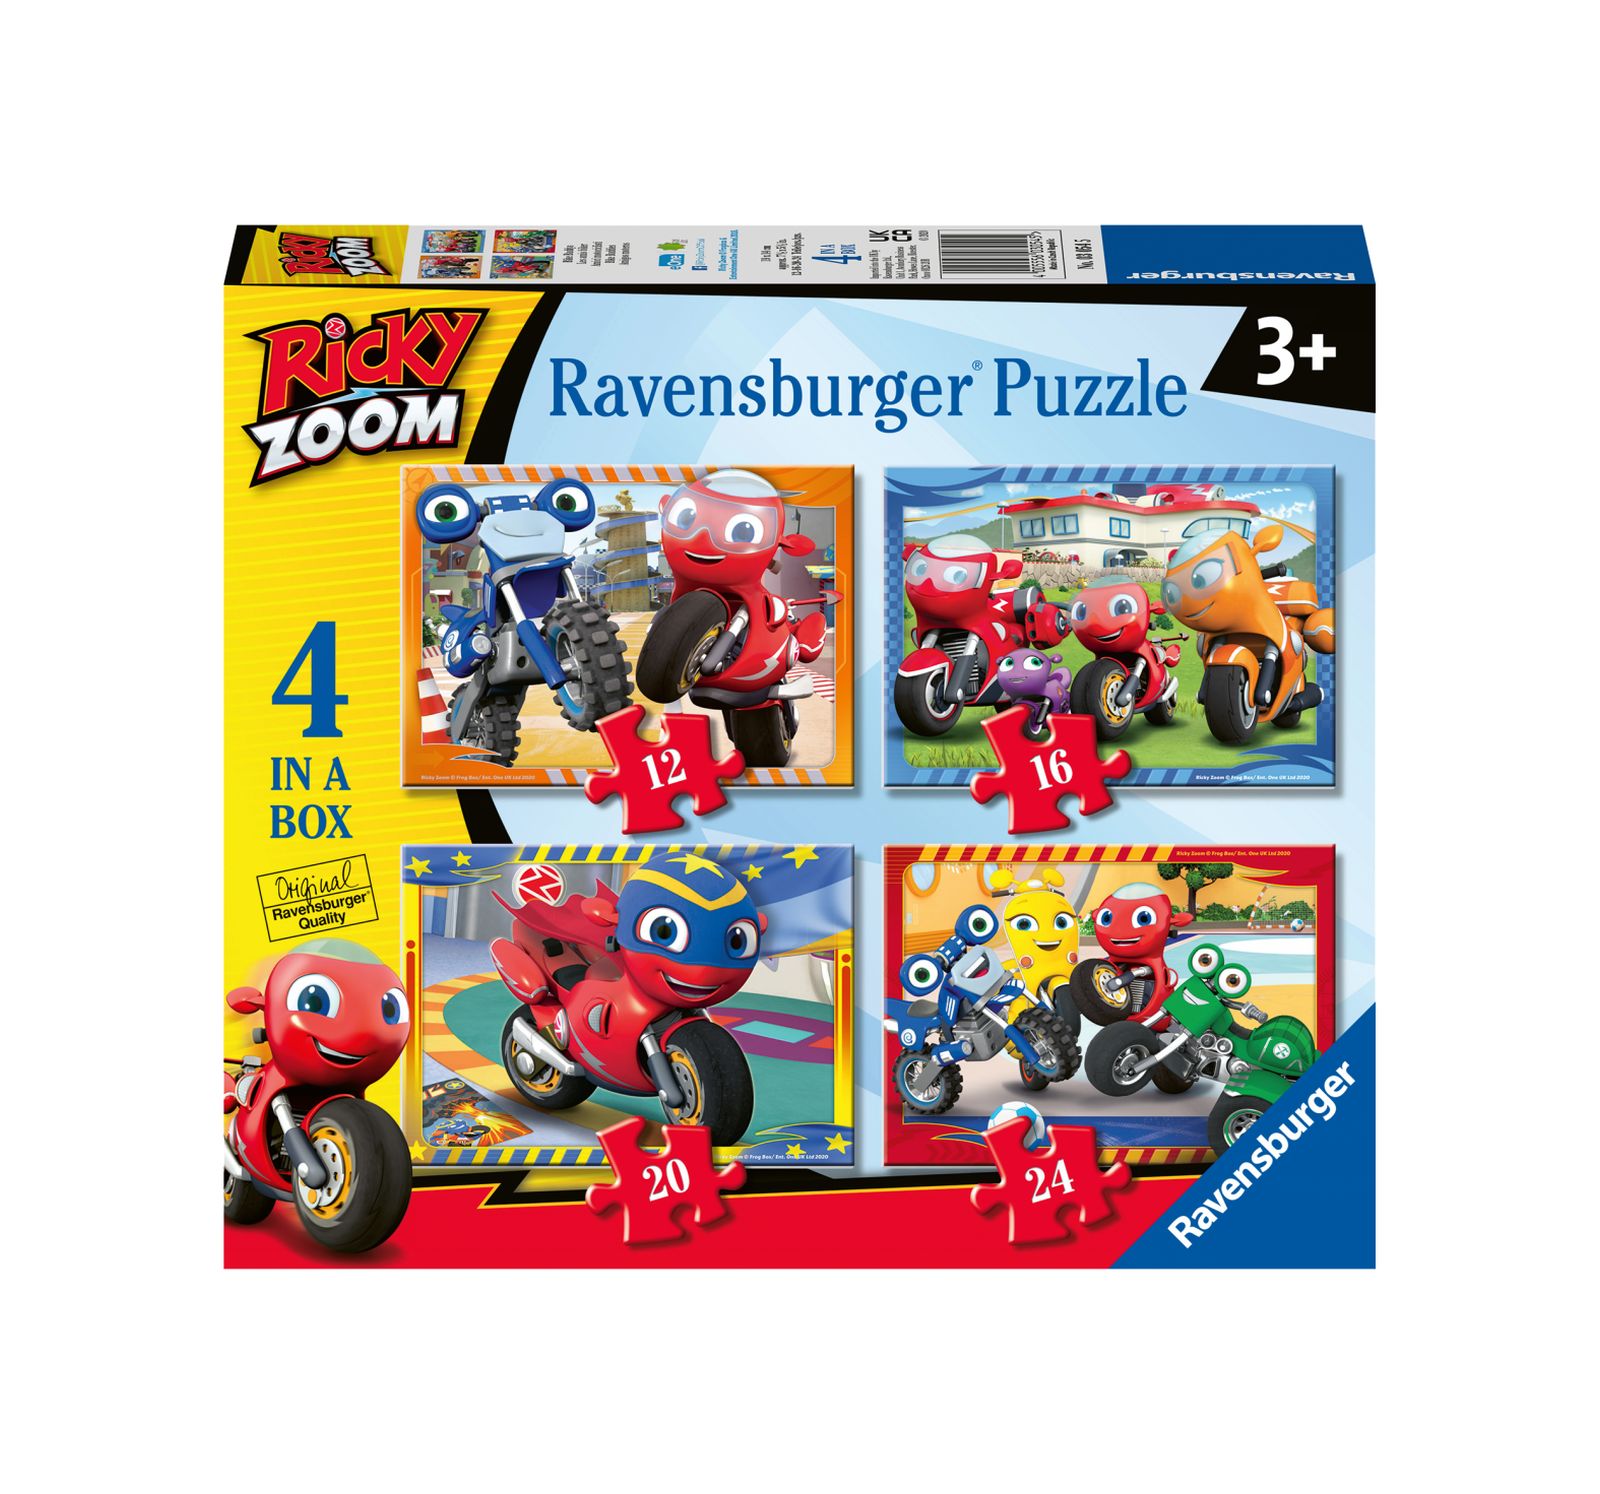 Ravensburger - 4 in a box - ricky zoom - RAVENSBURGER